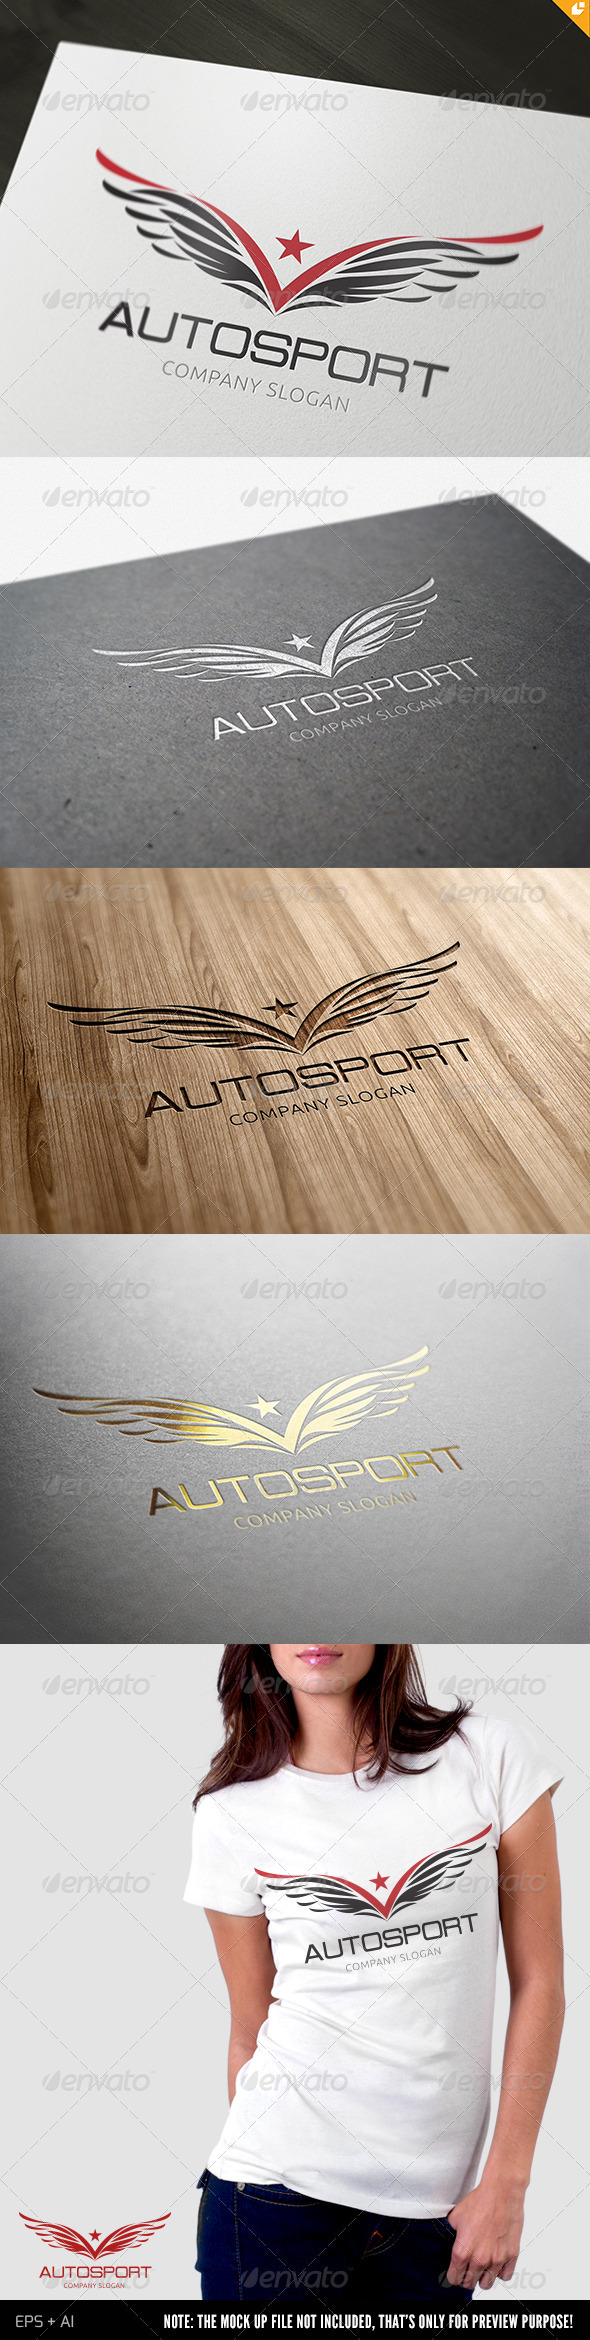 Autosport Logo